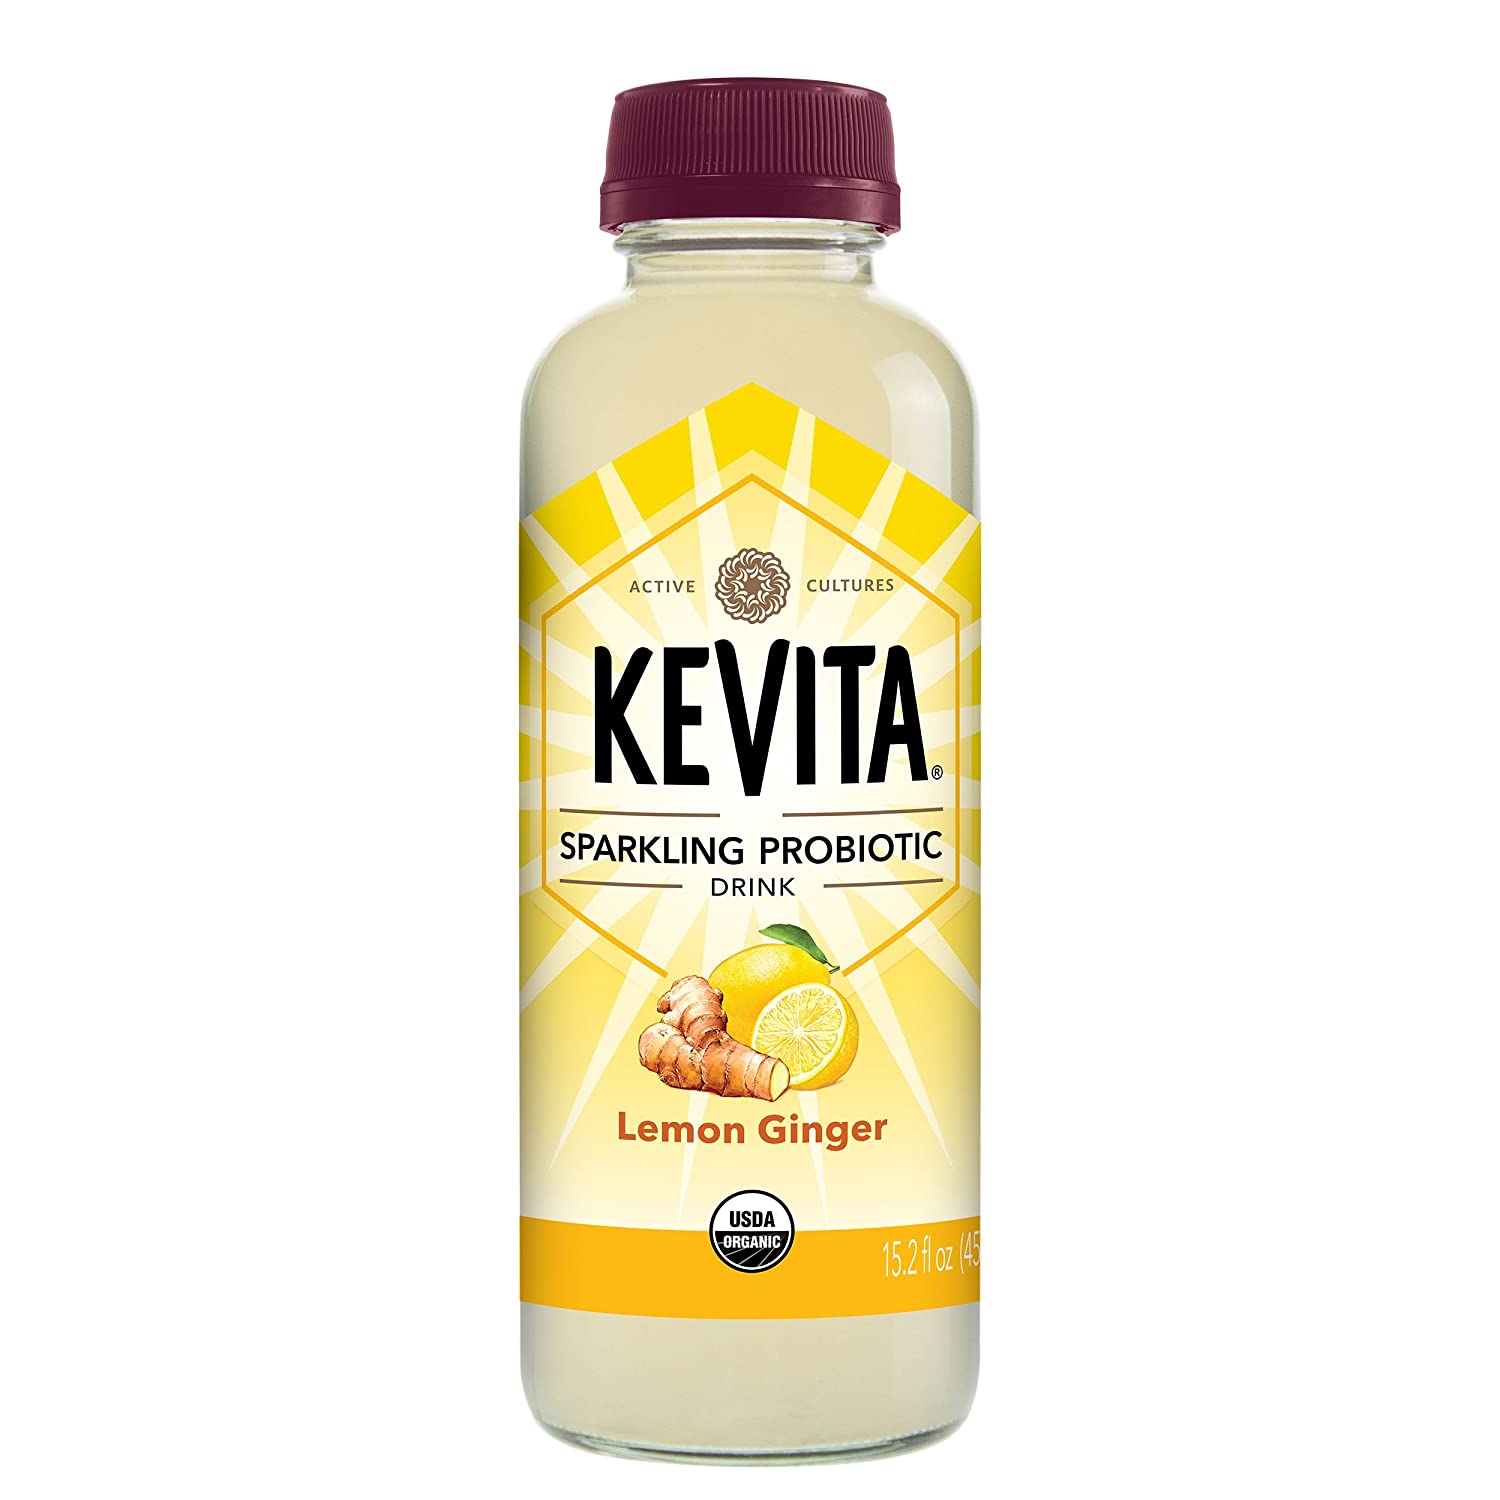 KeVita Probiotic Drink Review [2020] KeVita Sparkling Probiotic Drinks